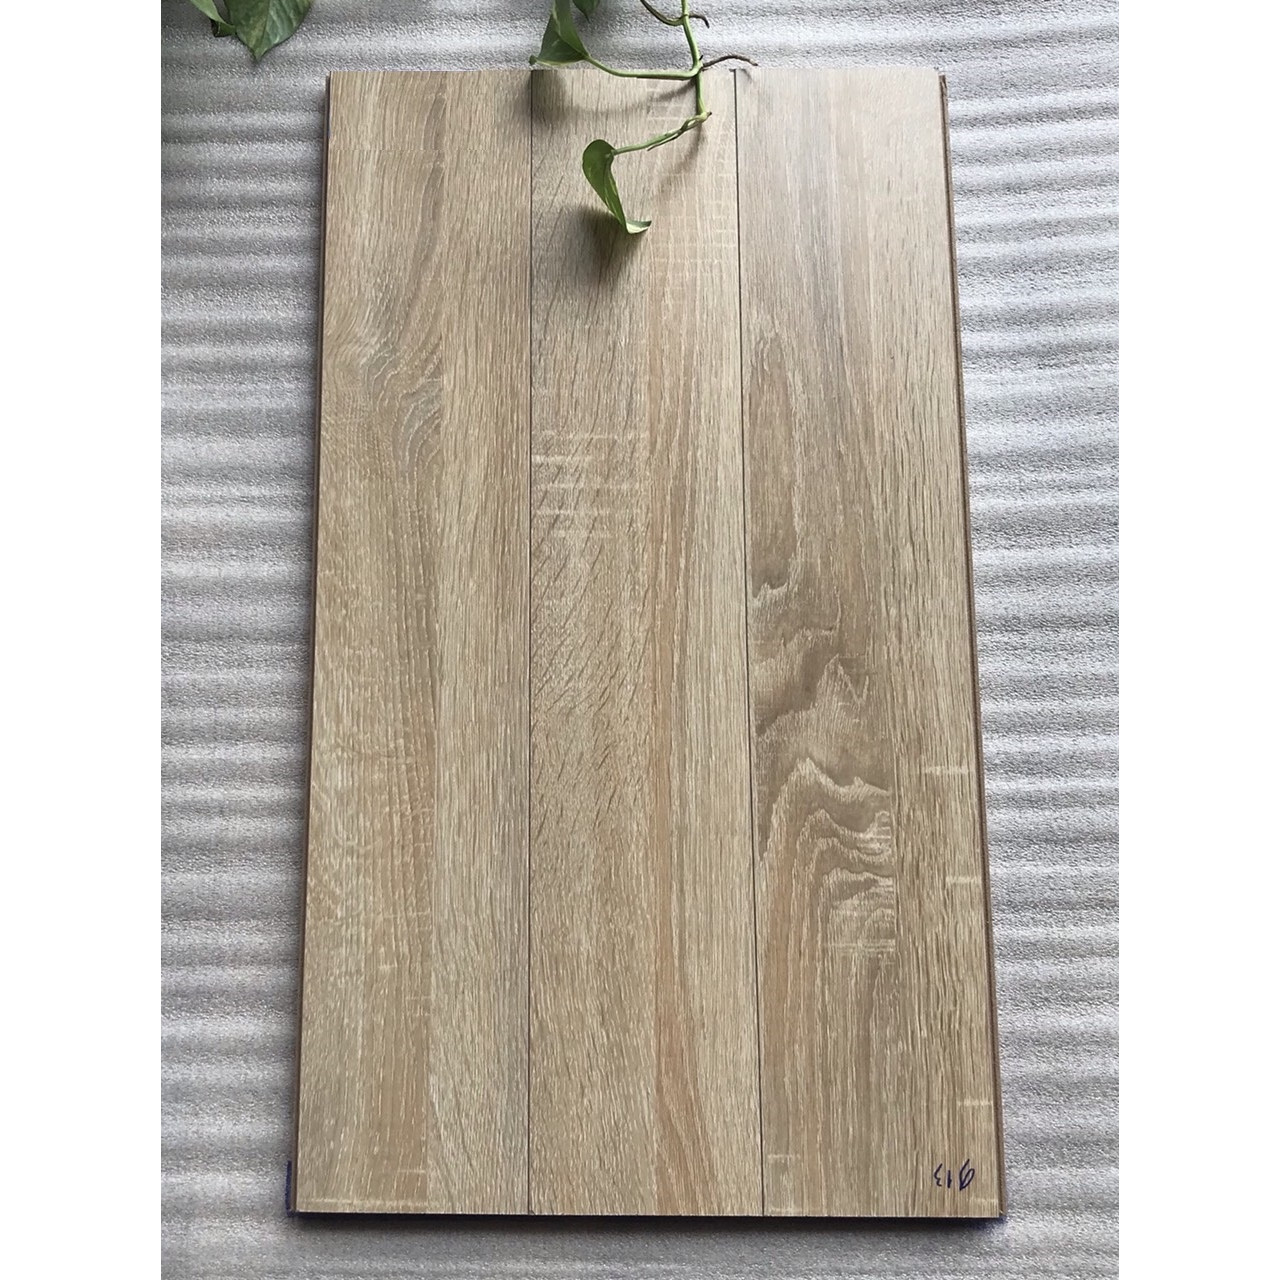 Sàn gỗ cao cấp Sophia S9XX - 1x1m